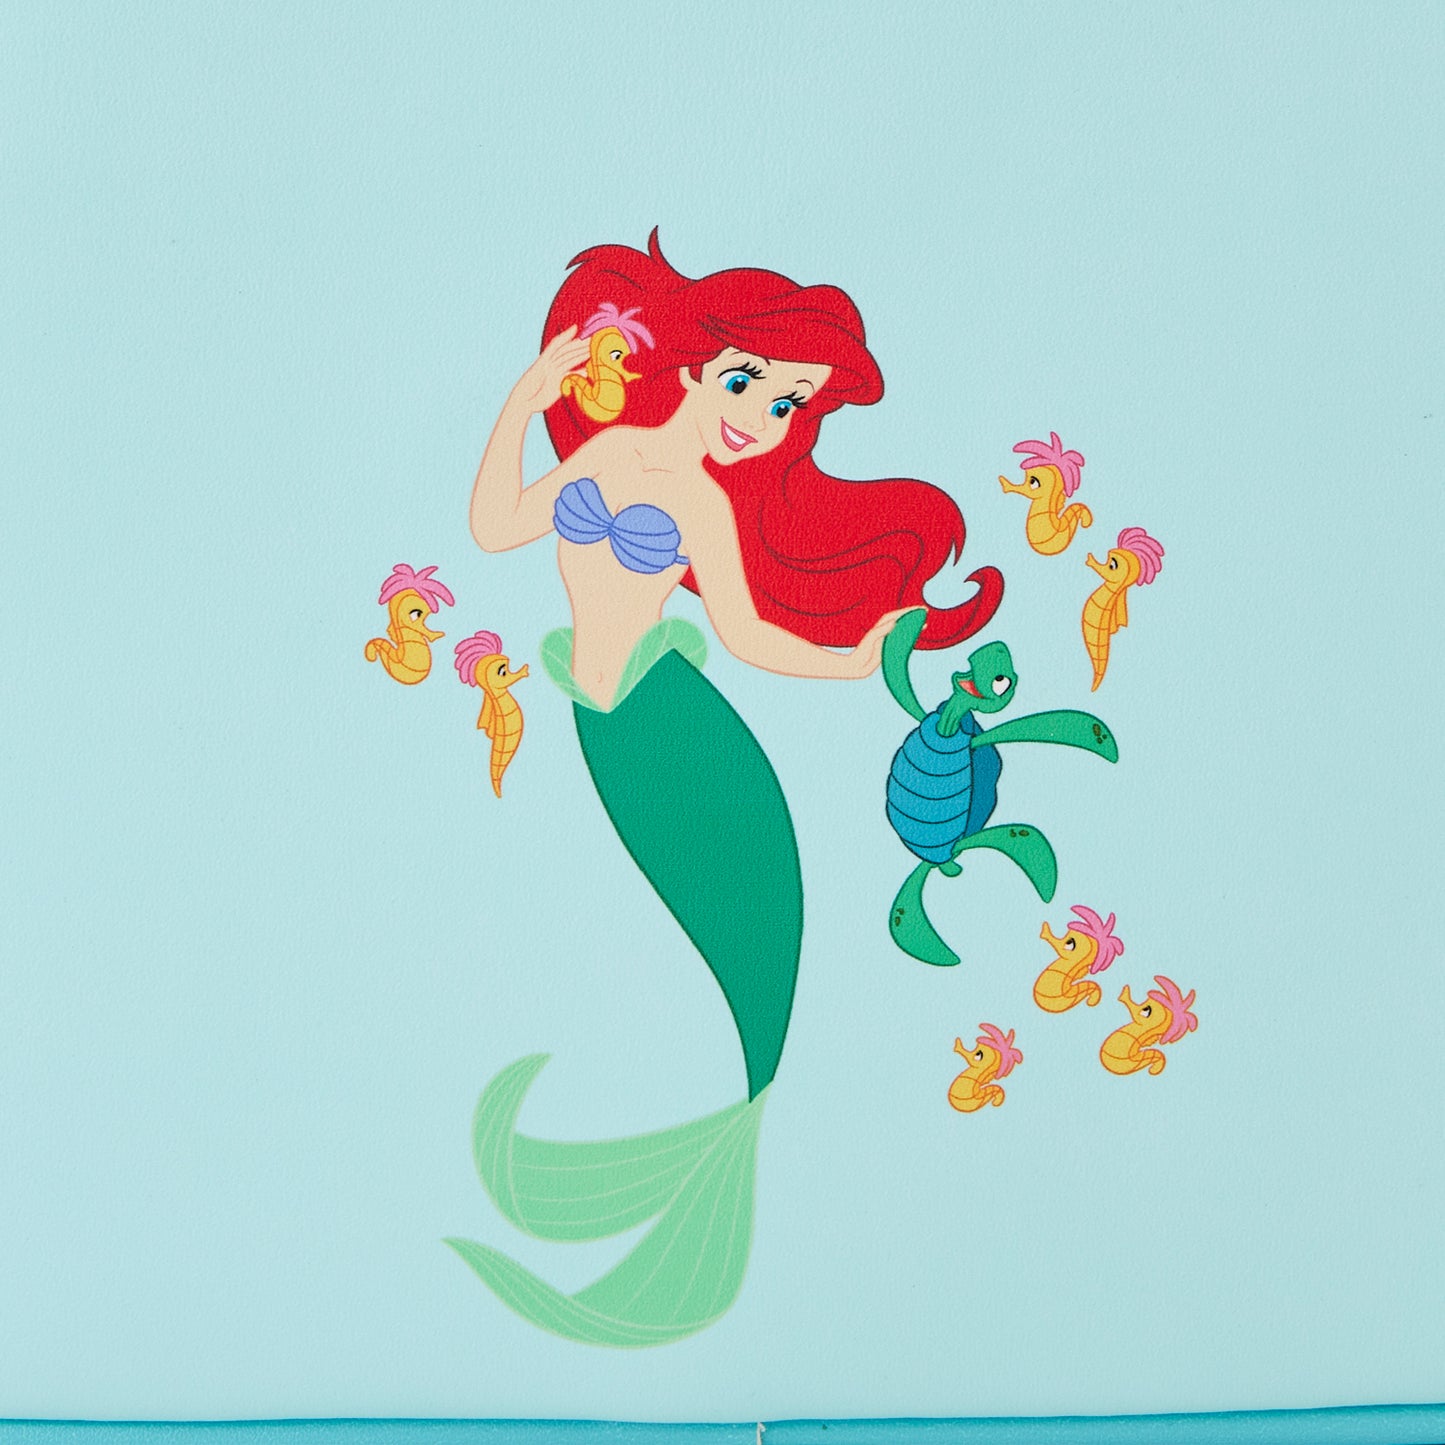 Loungefly Disney The Little Mermaid Princess Lenticular Mini Backpack *PRE-ORDER ITEM*